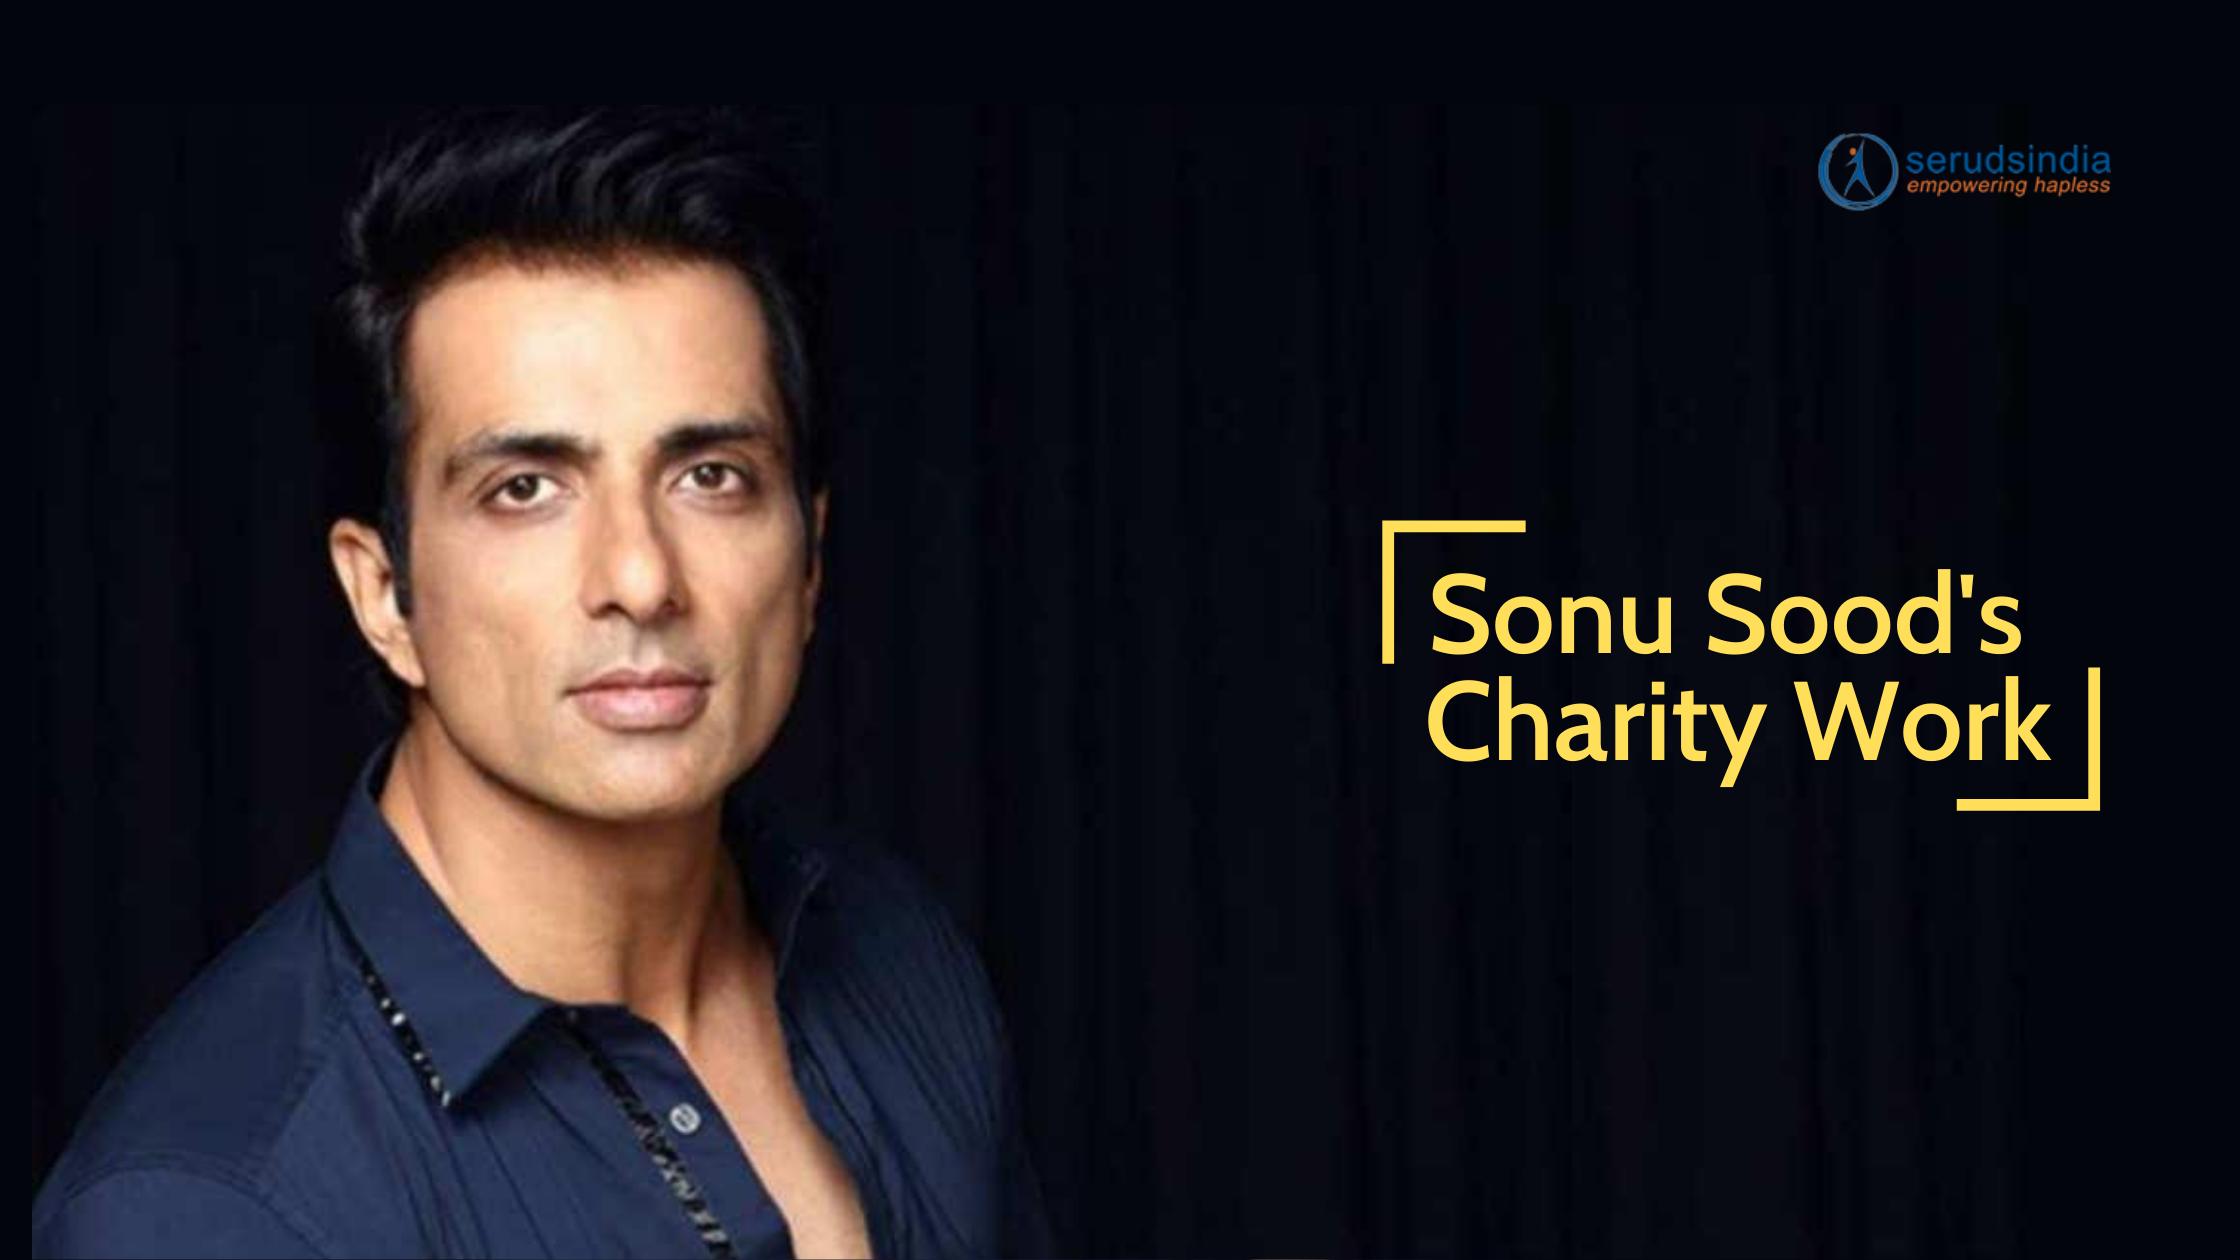 Sonu Sood’s Charity Work Makes Him Saviour Of The Needy _ SERUDS